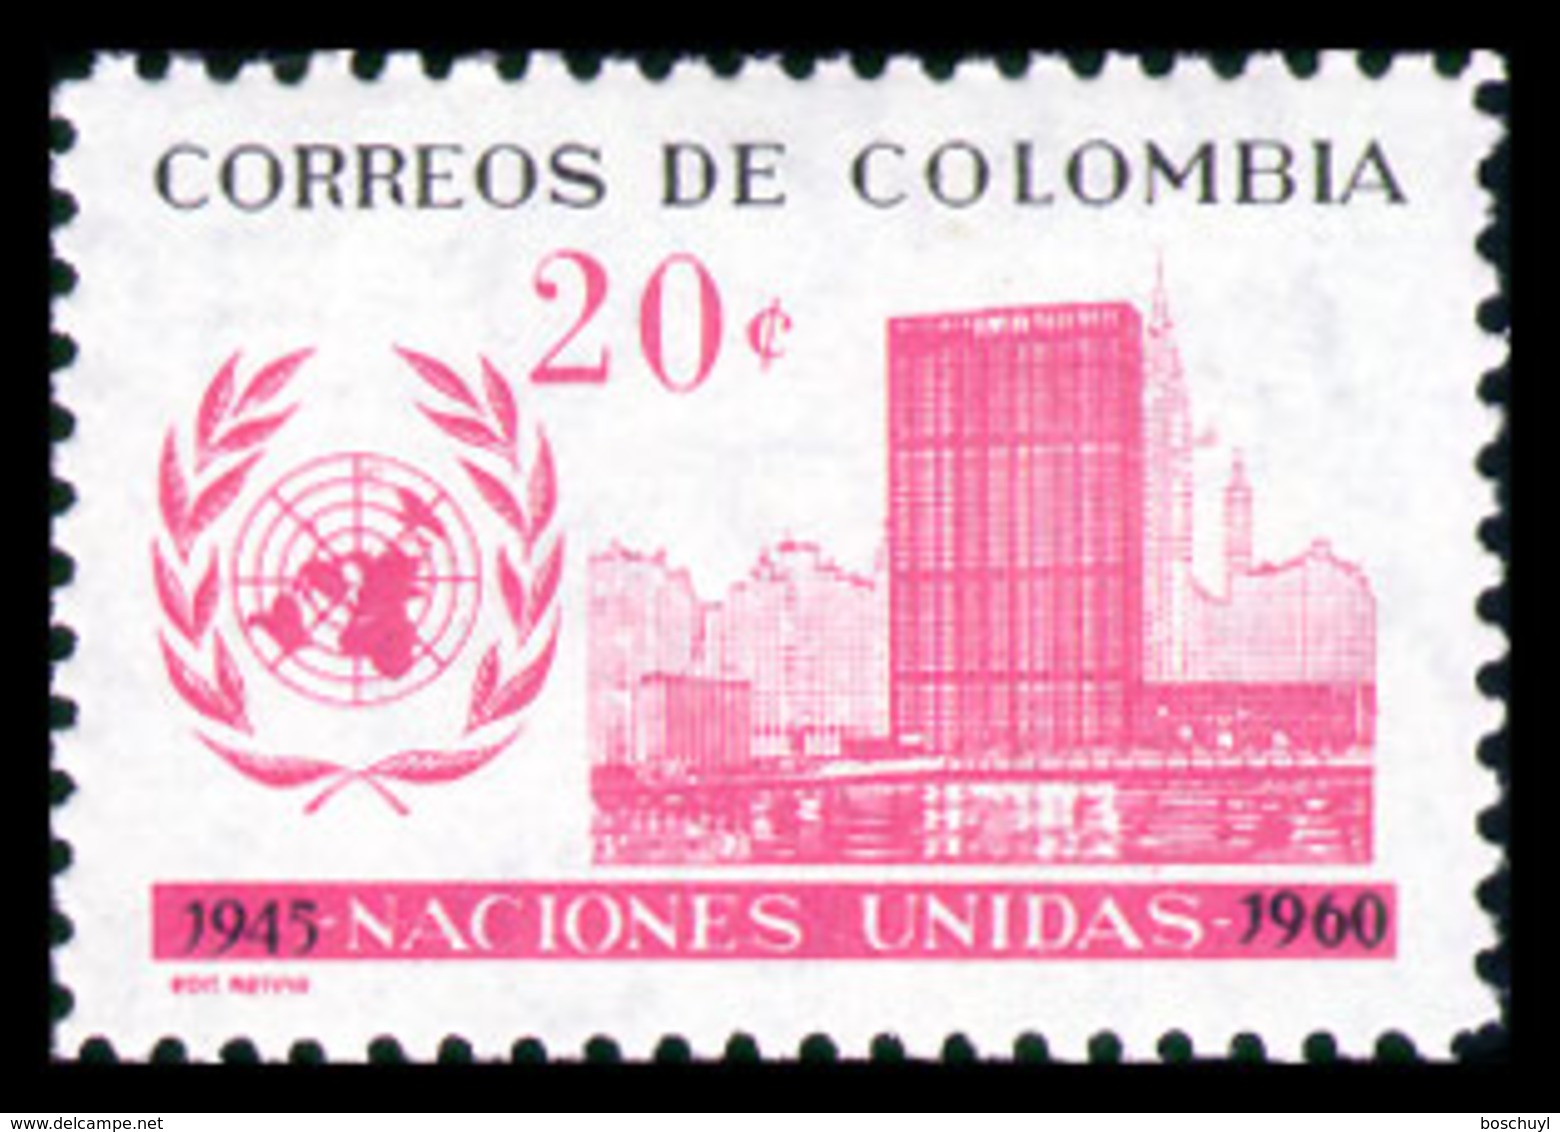 Colombia, 1960, United Nations, 15th Anniversary, MNH, Michel 953 - Kolumbien